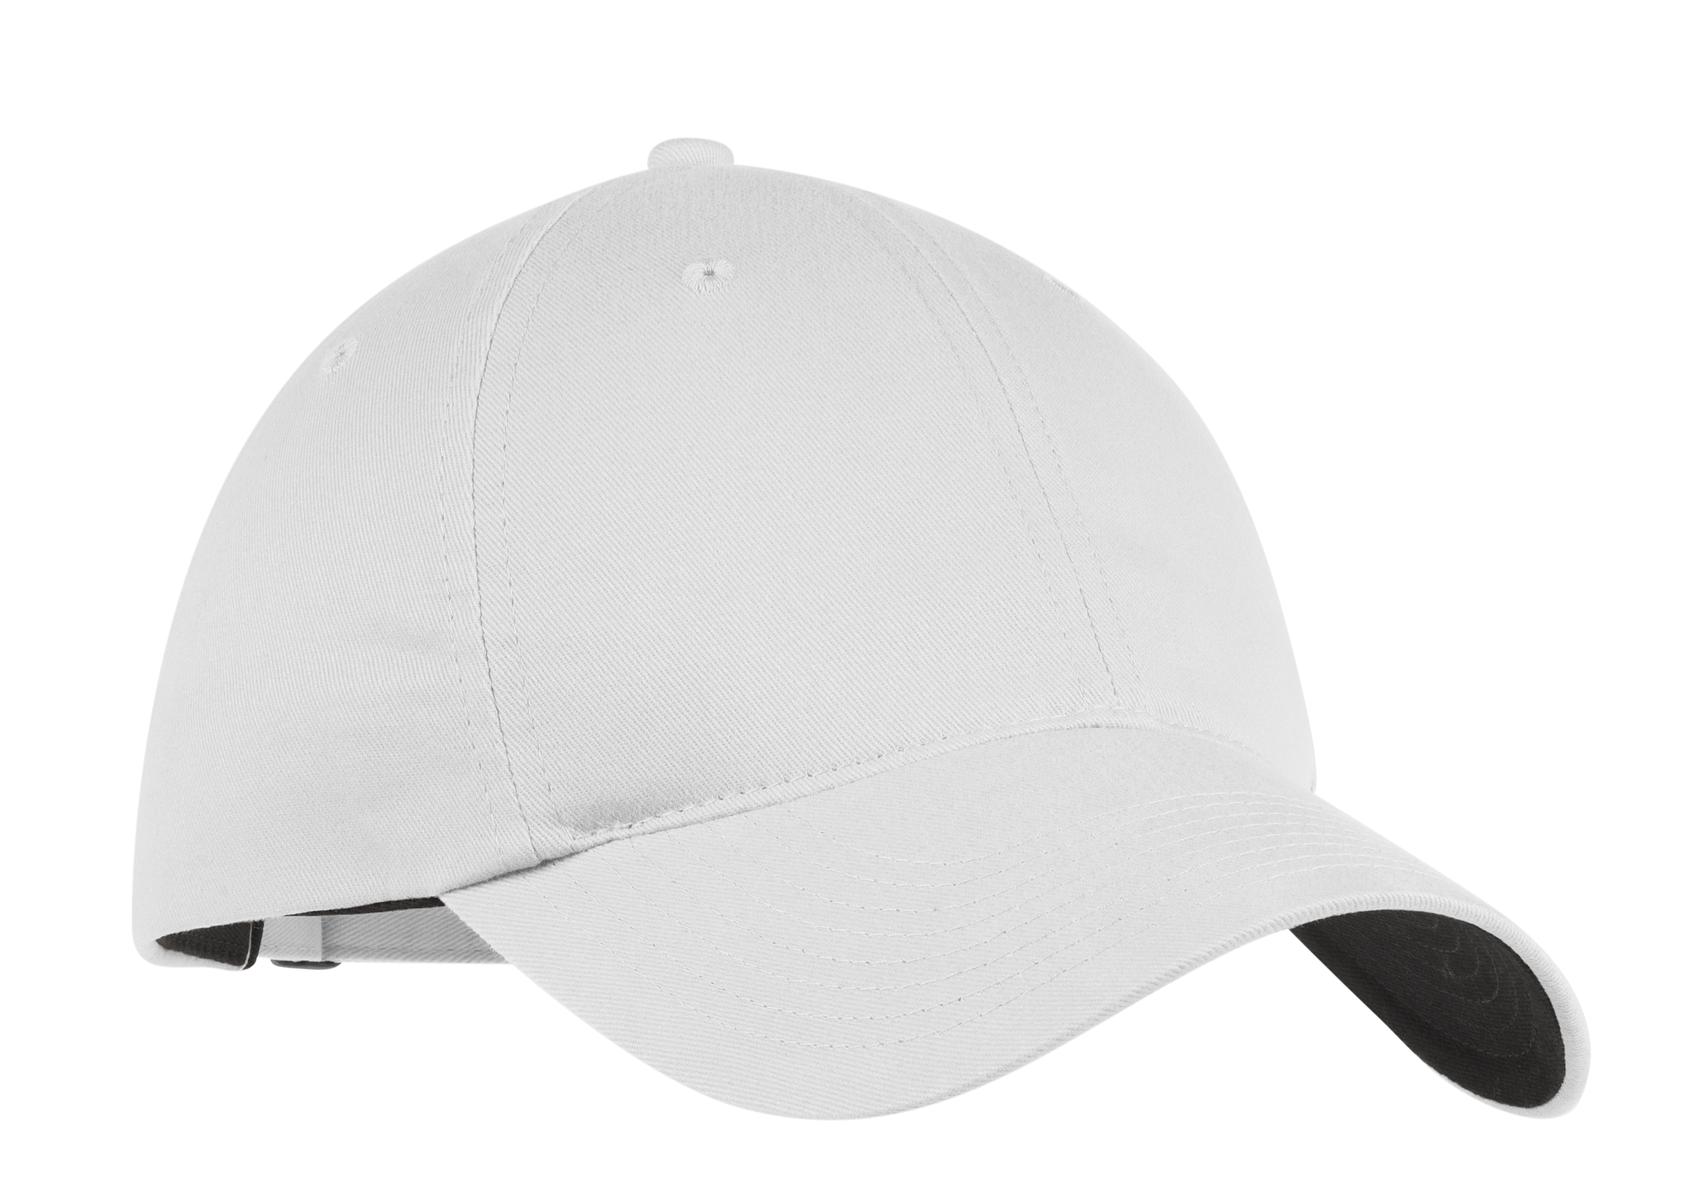 Nike Hospitality Caps Unstructured Twill Cap.-Nike